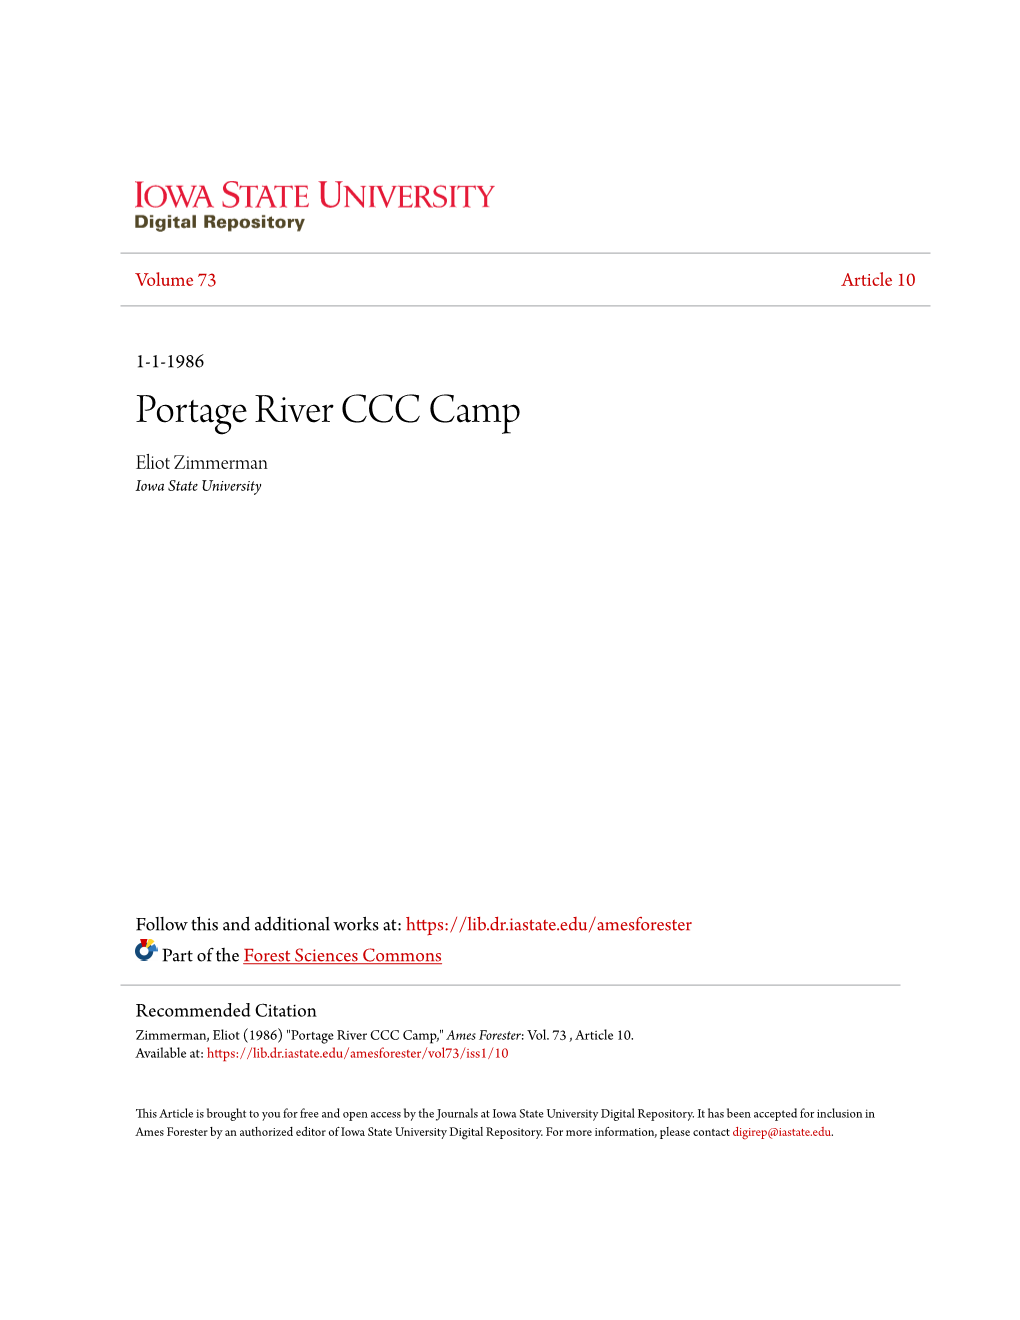 Portage River CCC Camp Eliot Zimmerman Iowa State University